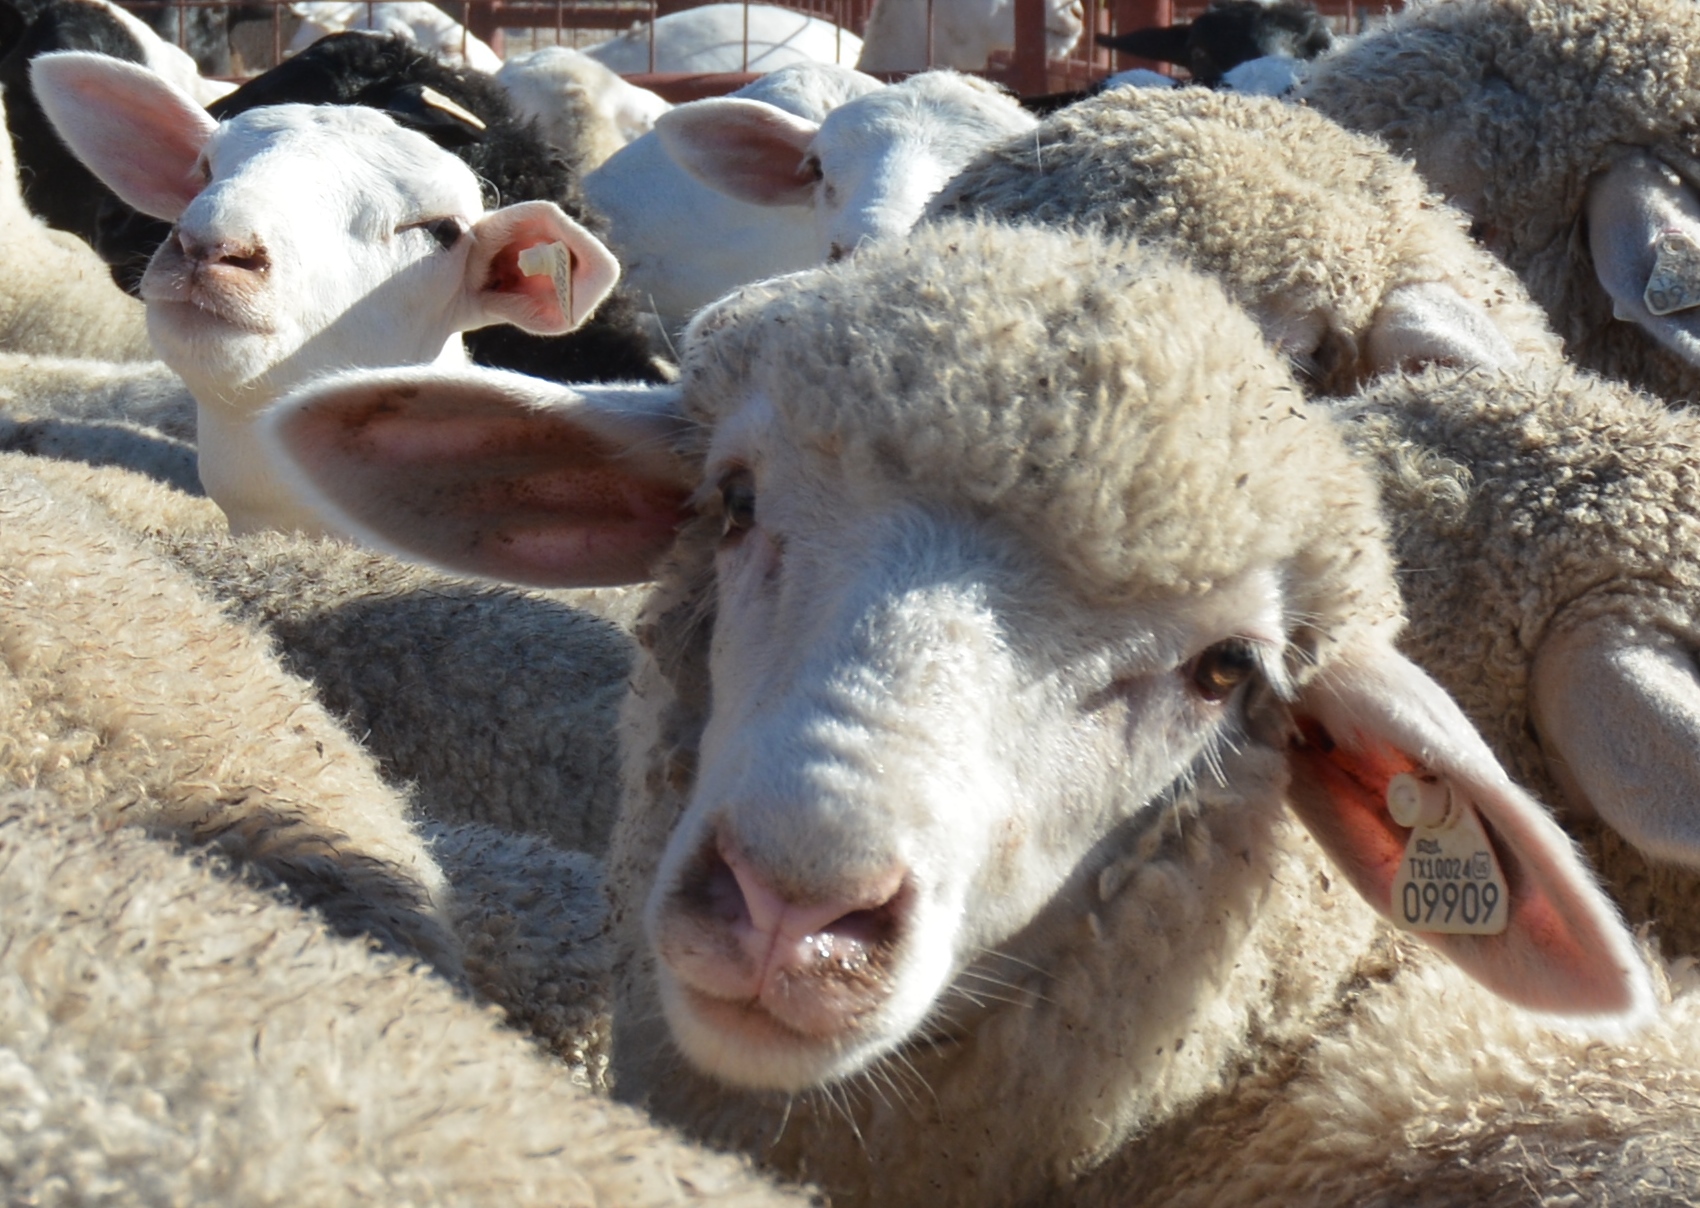 Texas Sheep and Goat Expo set for Aug. 19-20